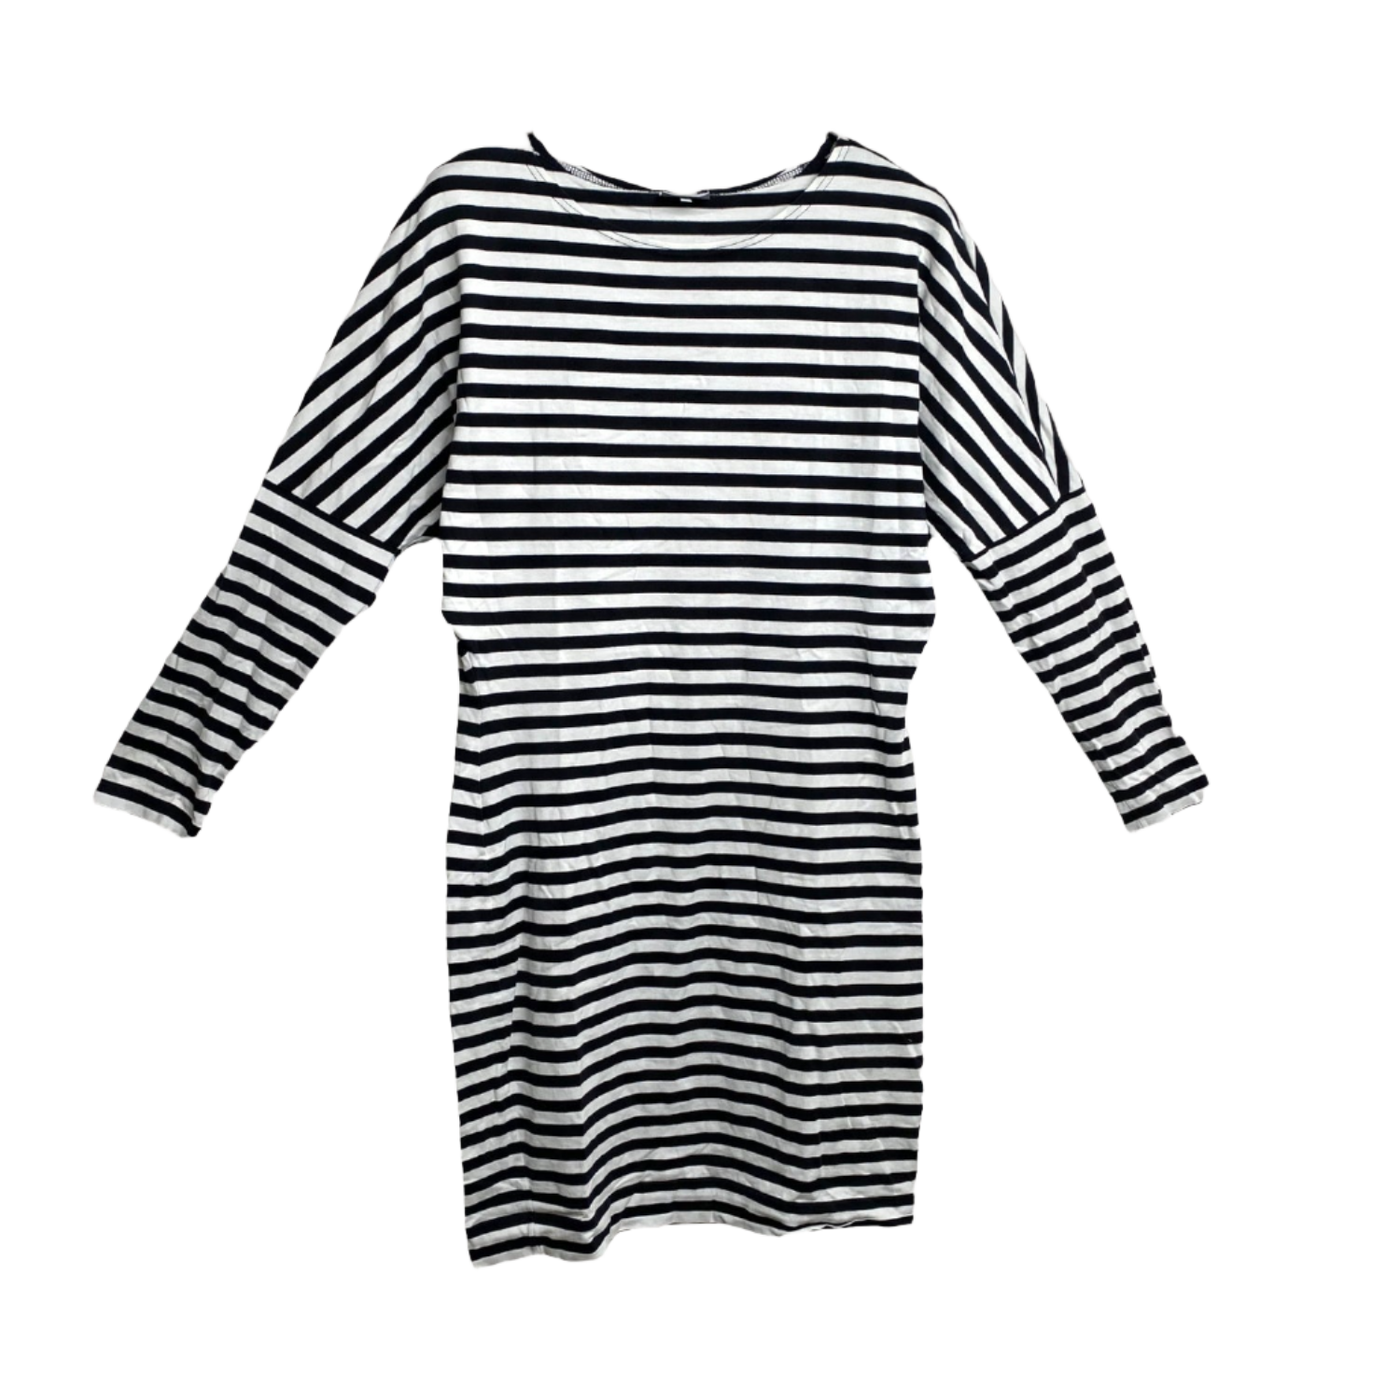 Marimekko stripe dress, black and white | woman M